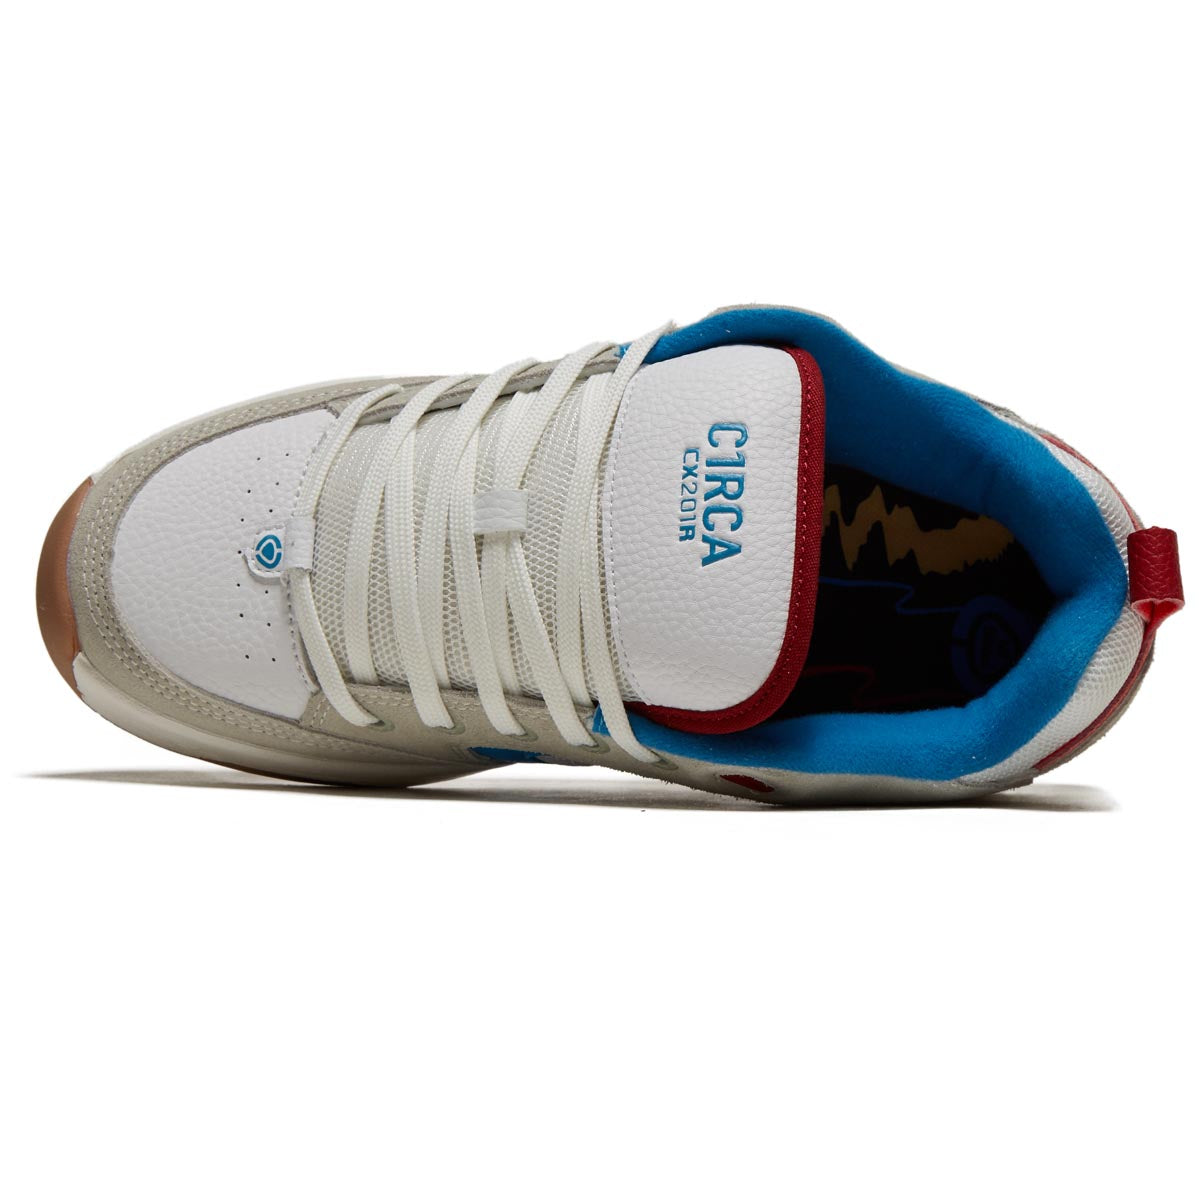 C1rca CX201R Shoes - White/Atlantic Blue/Red image 3